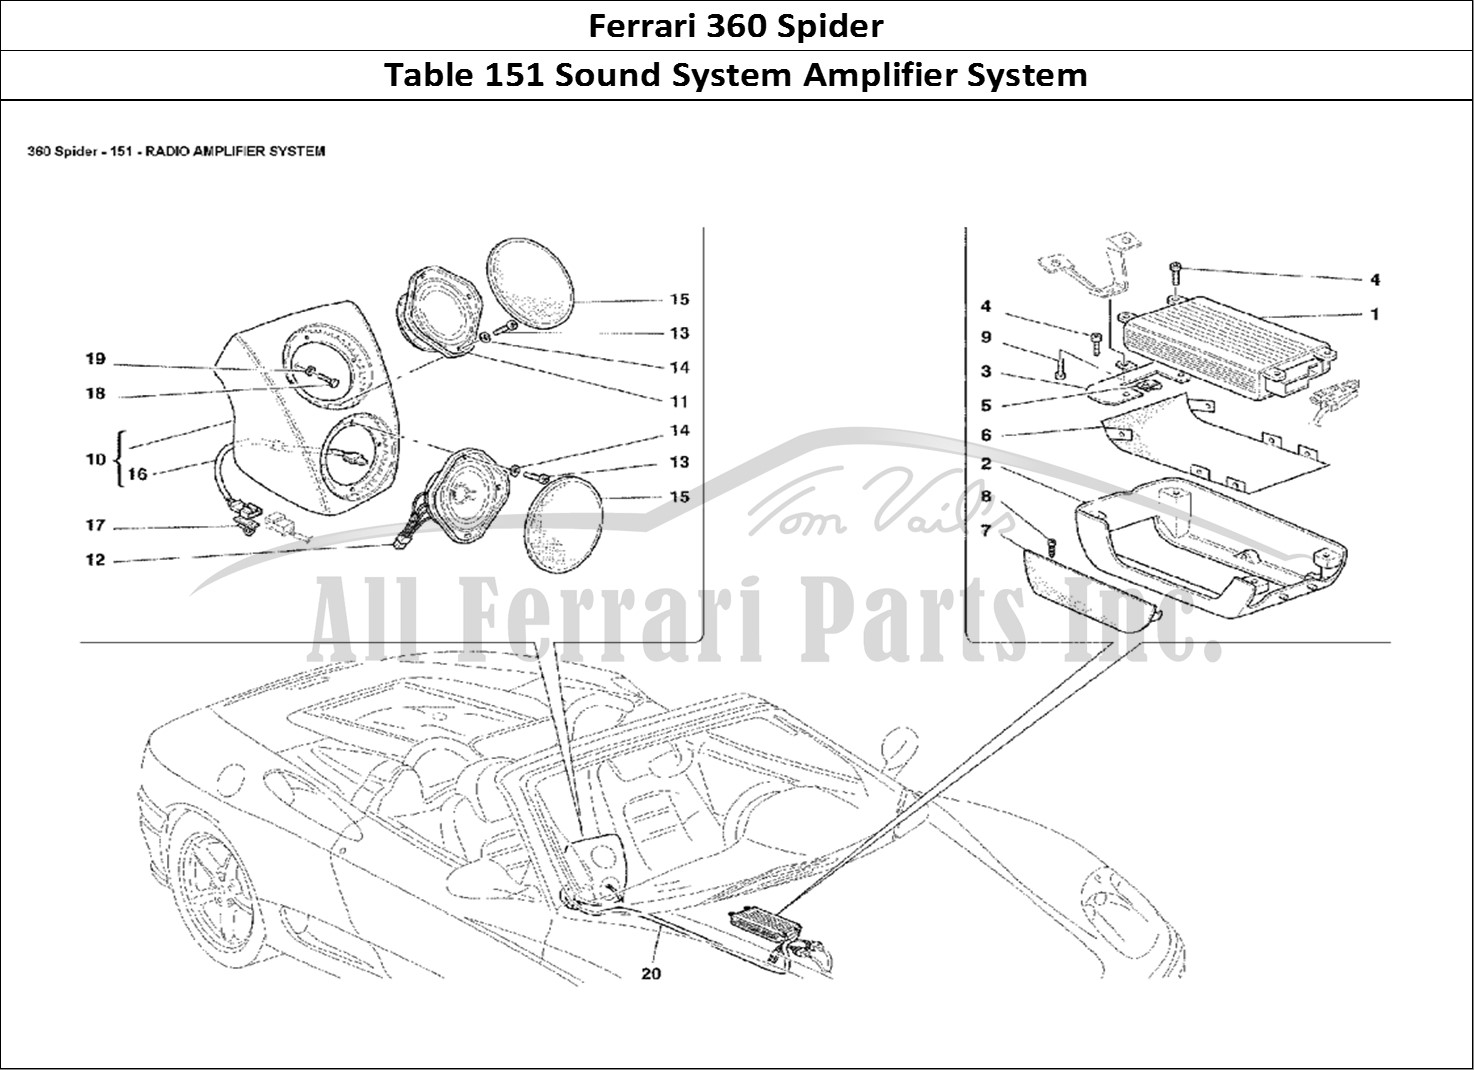 Ferrari Parts Ferrari 360 Spider Page 151 Radio Amplifier System